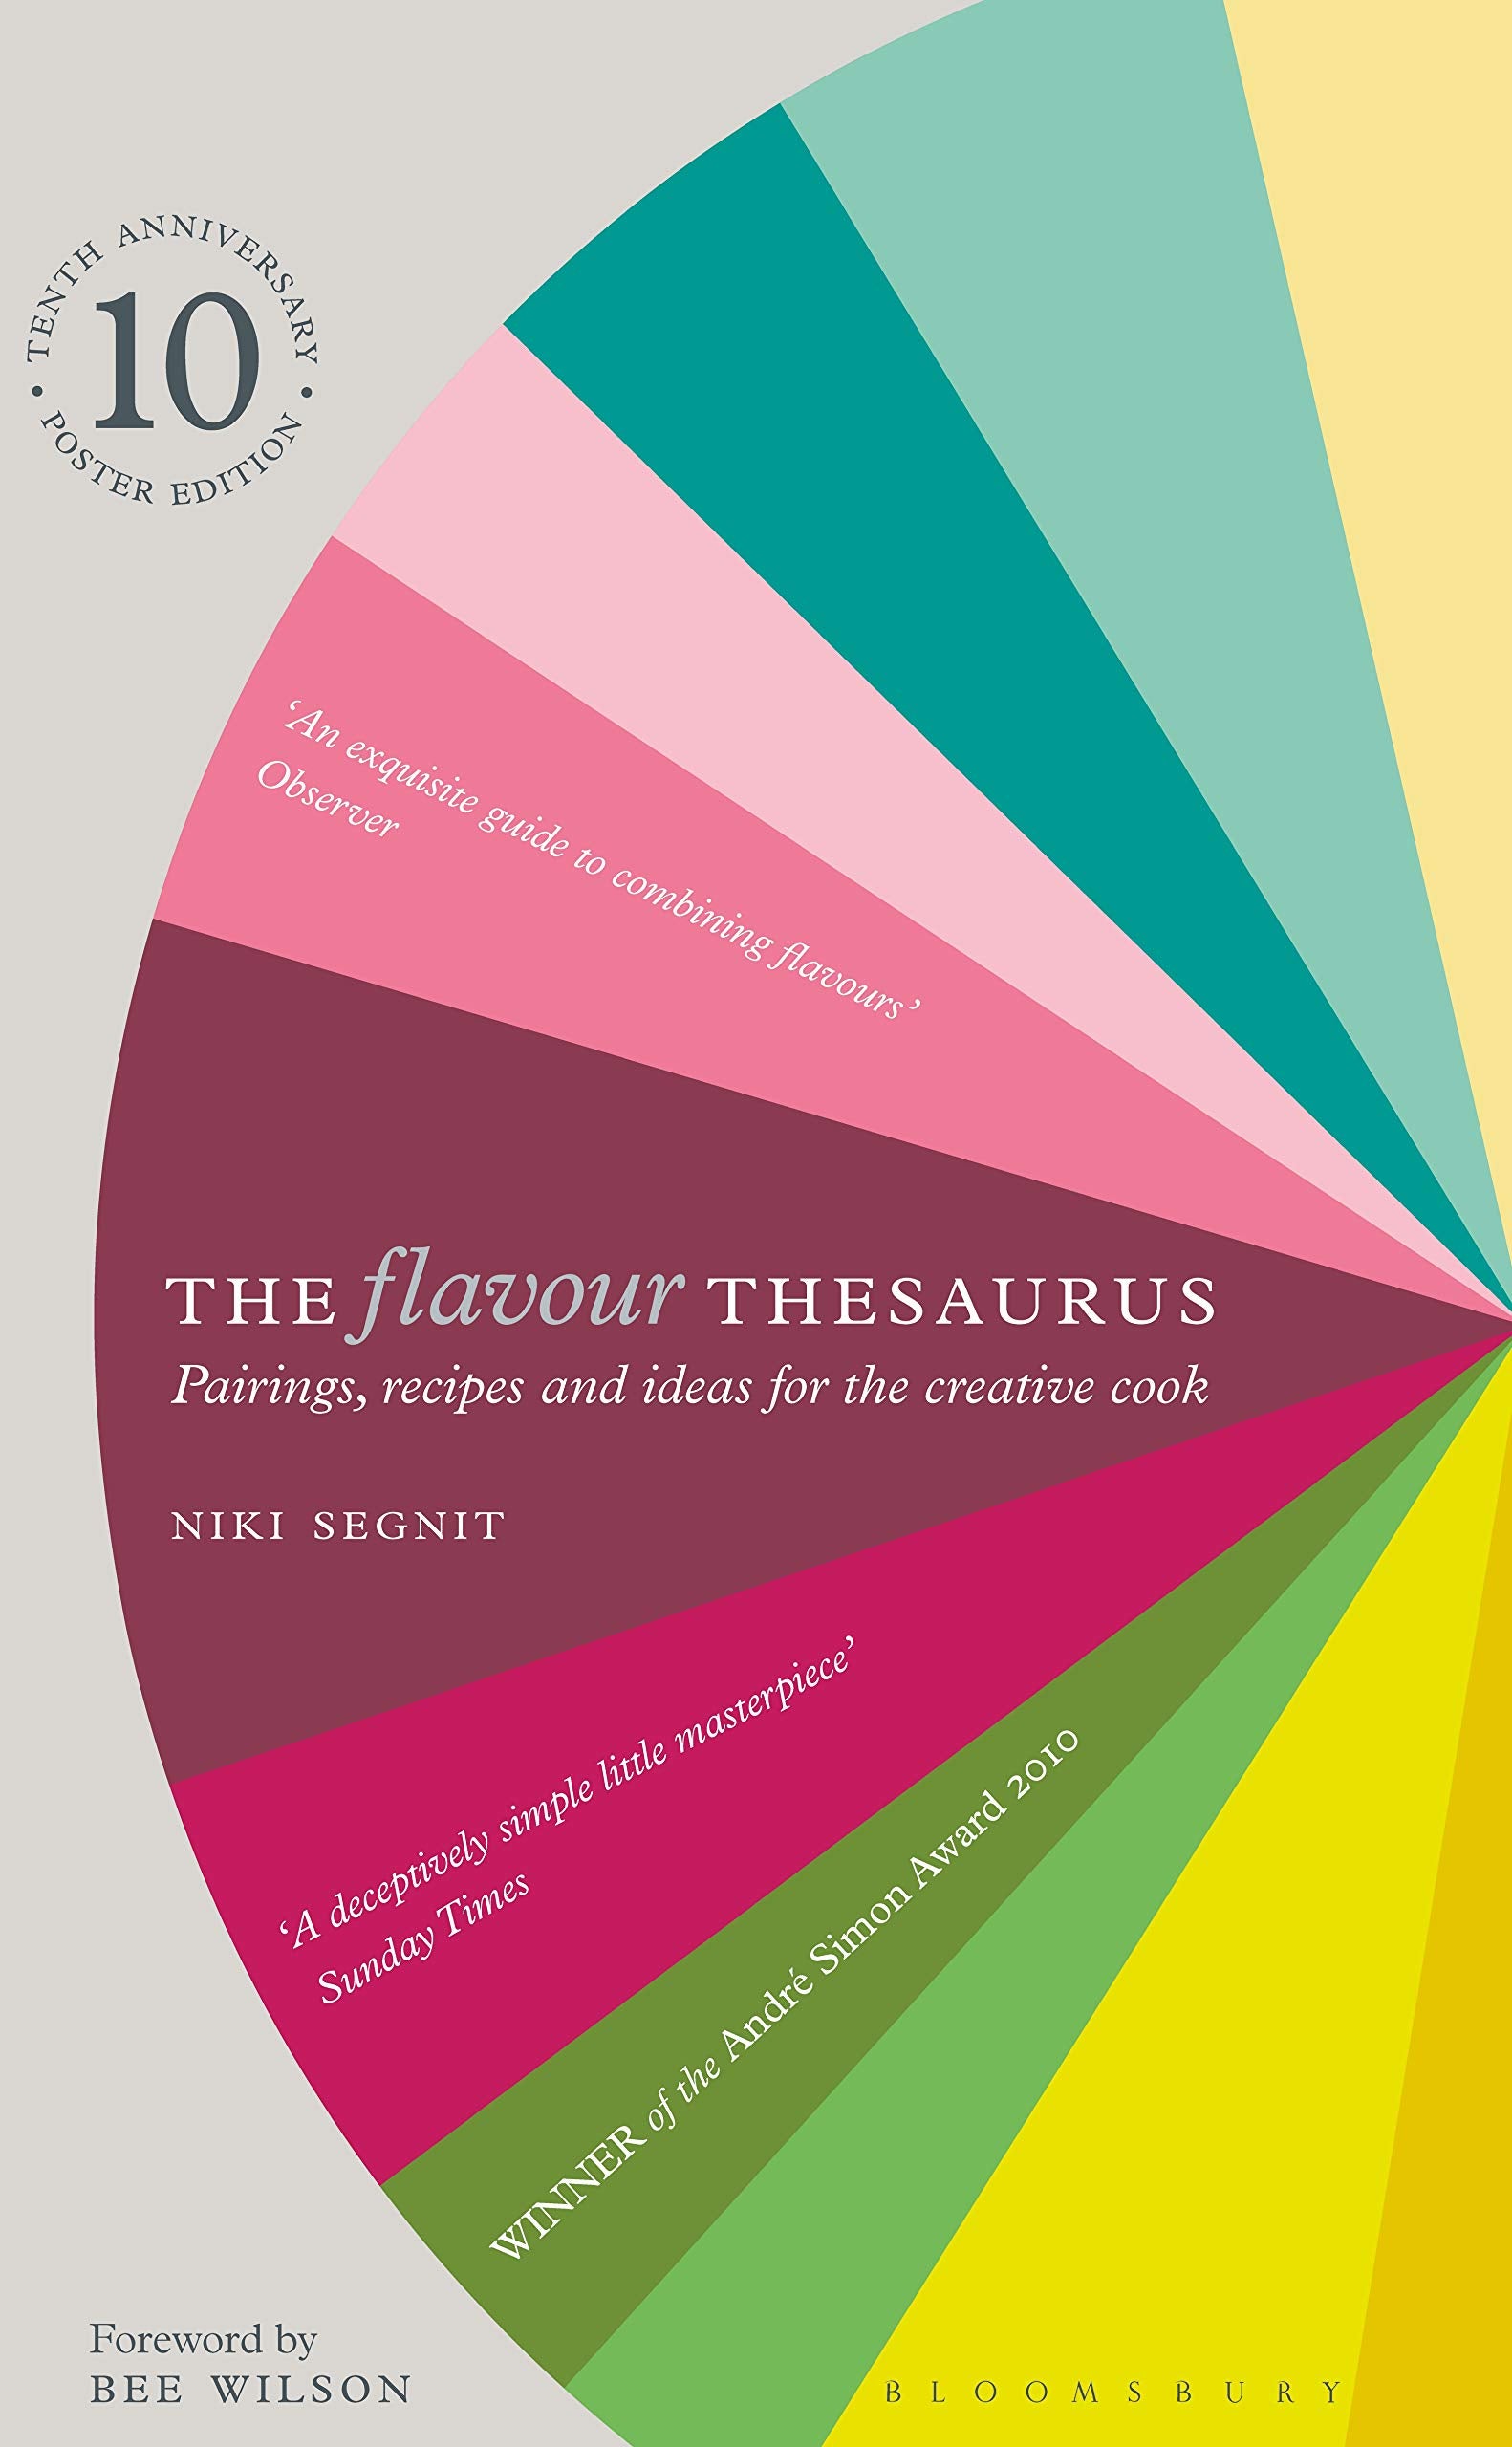 Flavor Thesaurus (Niki Segnit)